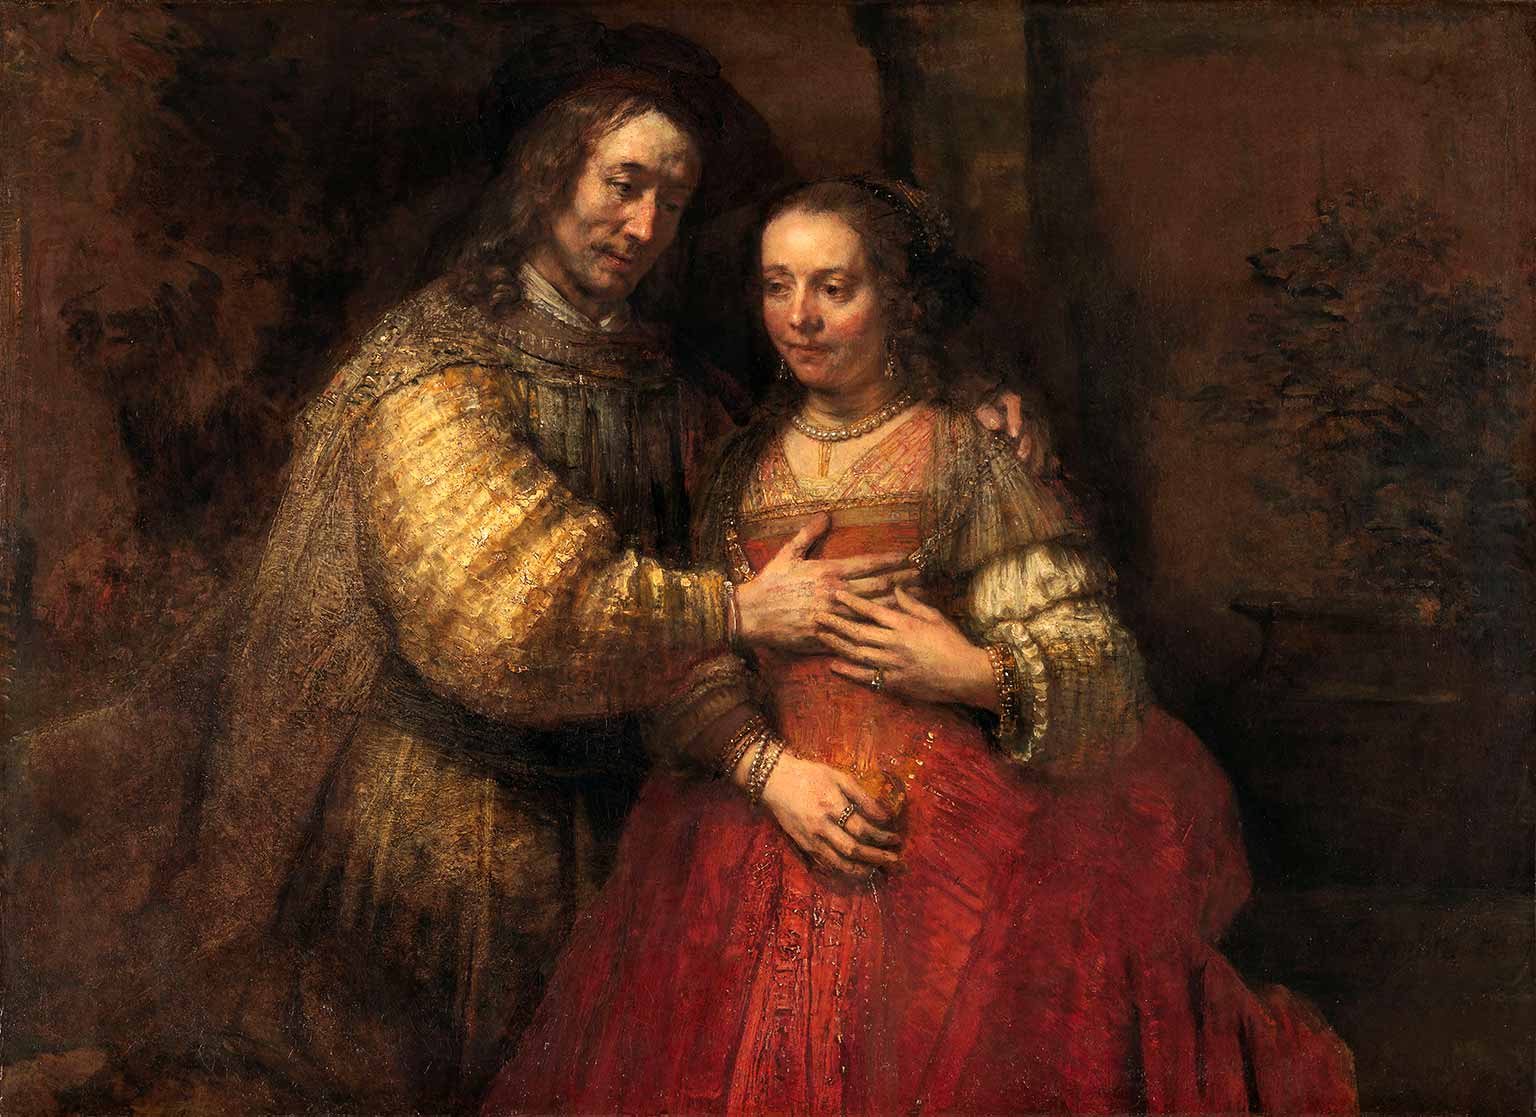 The Jewish Bride, painting by Rembrandt van Rijn from around 1665-1669